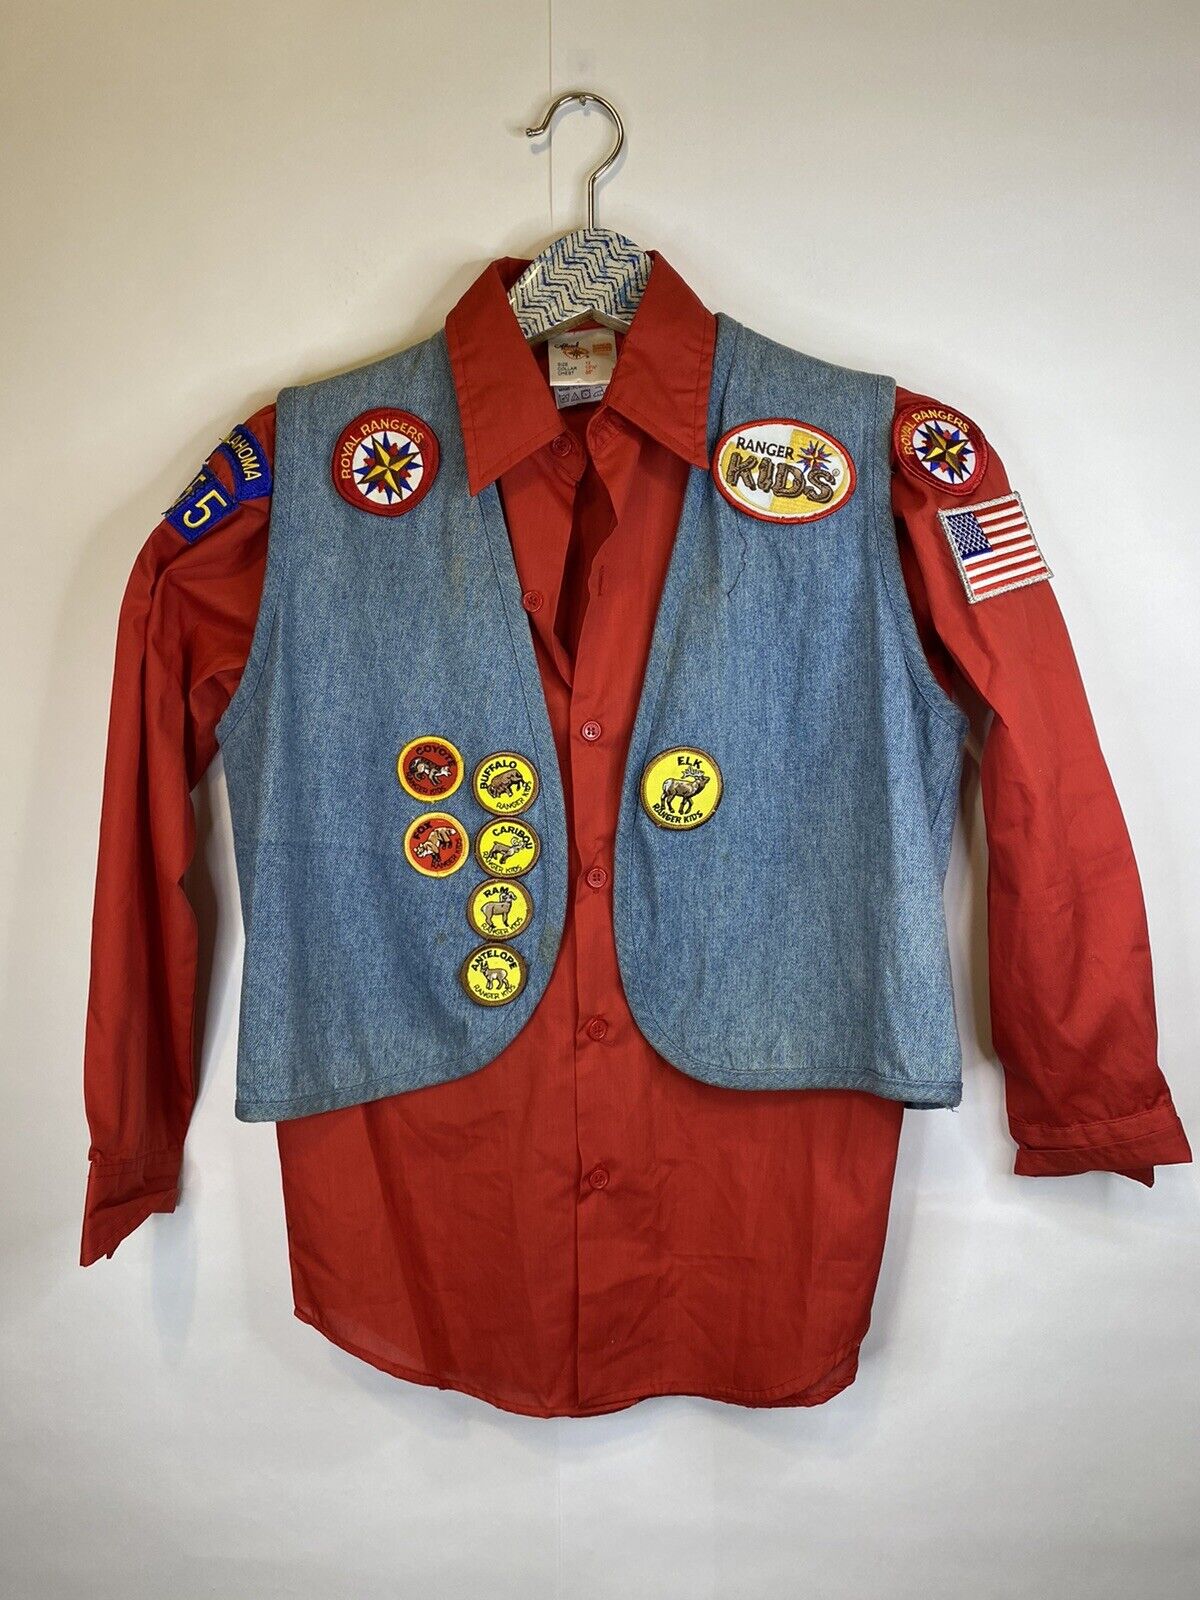 Kids Size 12 Royal Rangers Red Shirt + Denim Vest Patches Boy Scouts VTG Rare